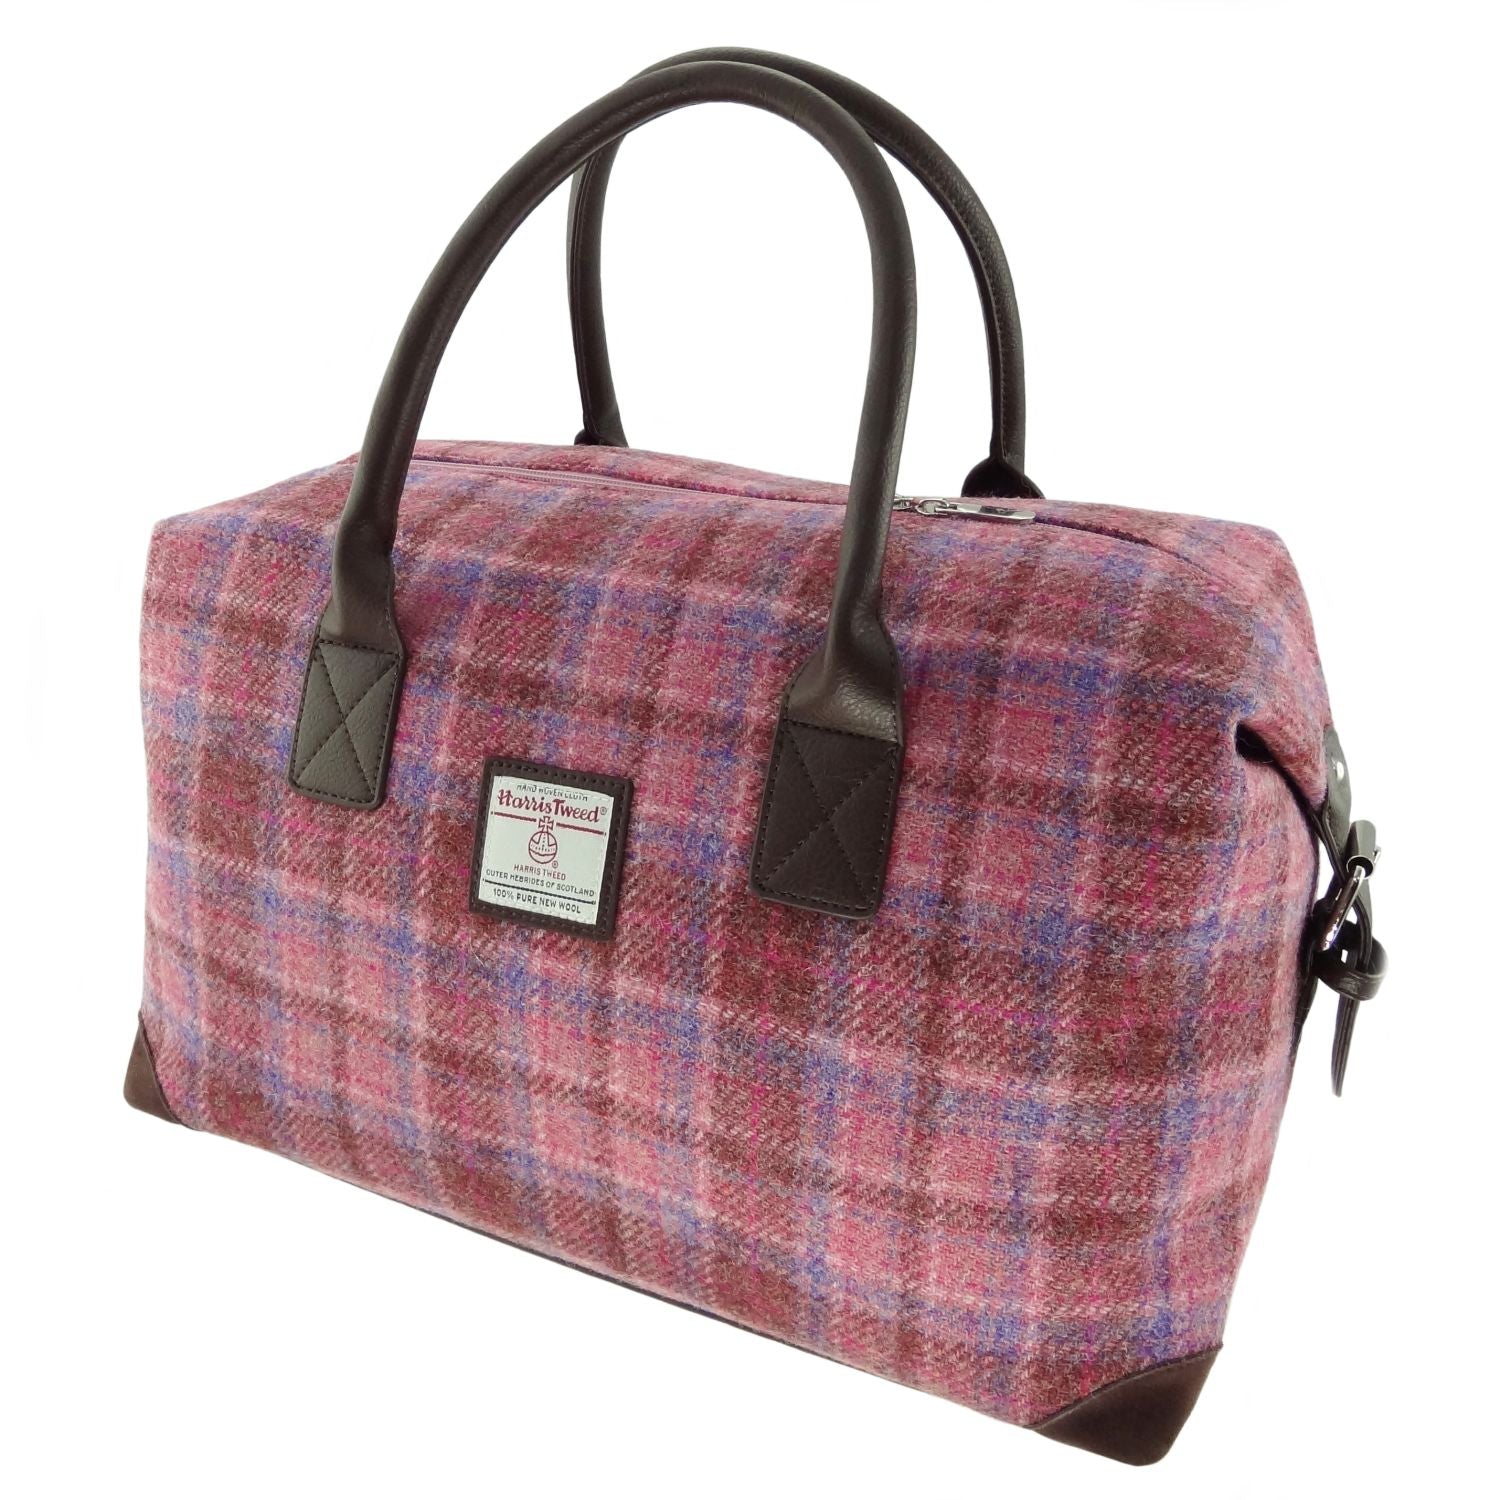 Tweed and Tartan Bags – Scottish Textiles Showcase